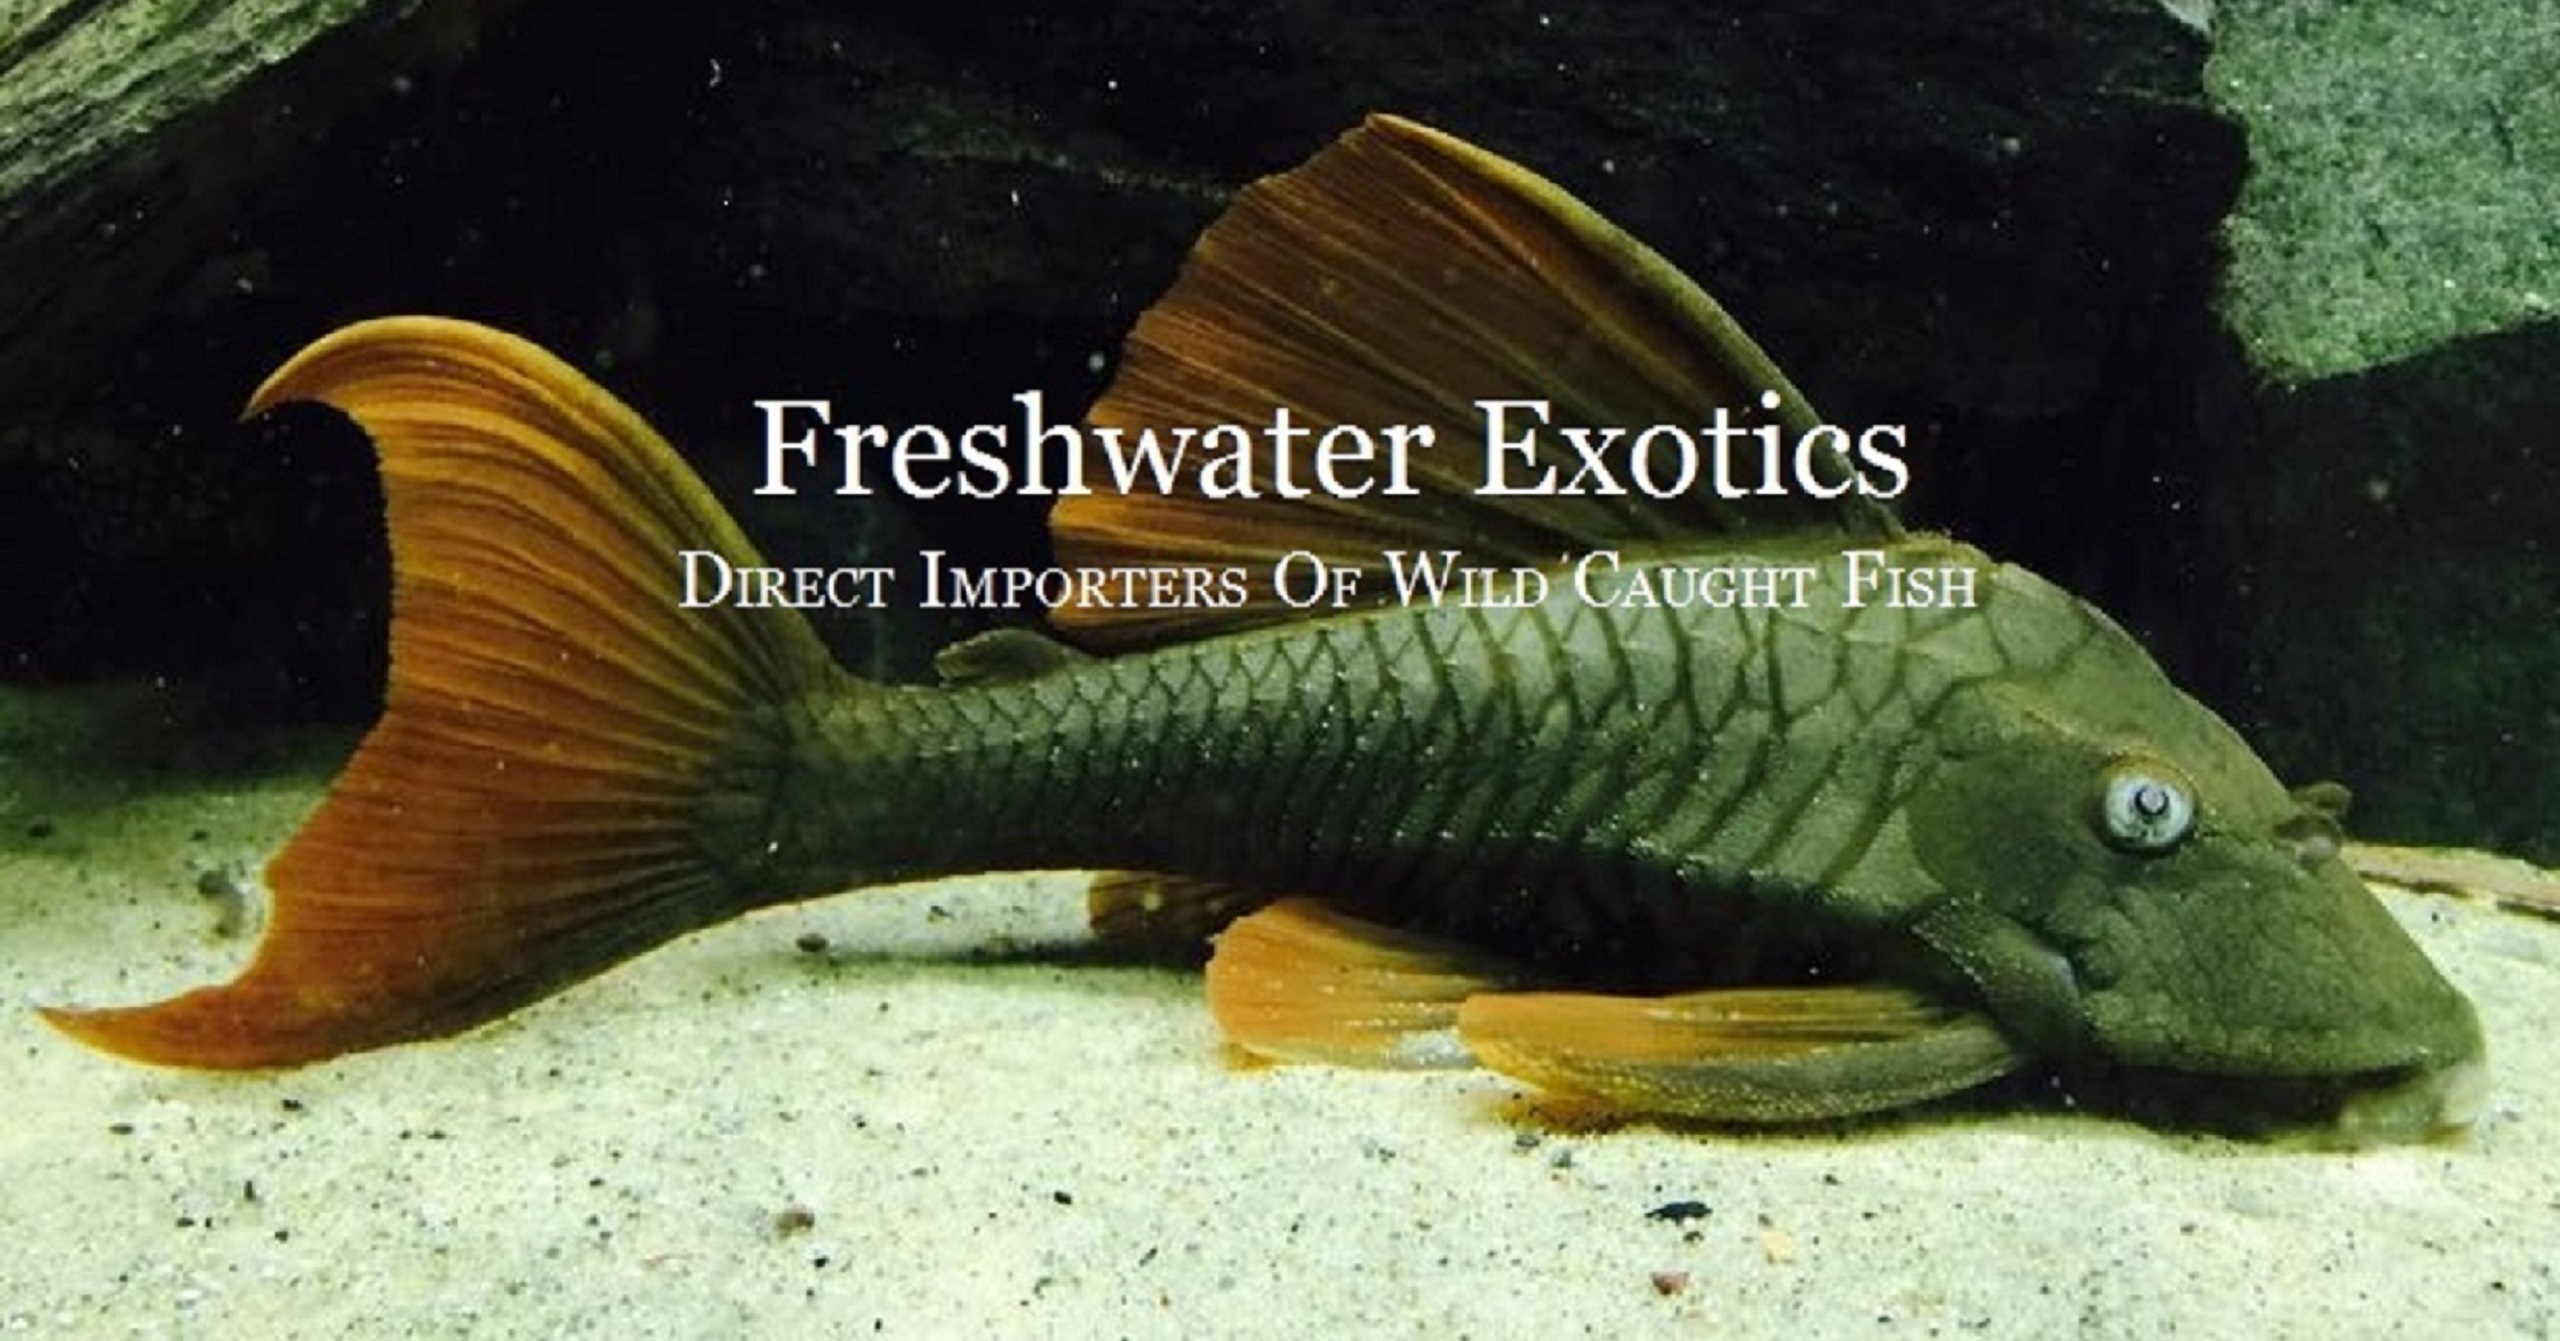 Wild Caught Fish - Freshwater Exotics Freshwater Exotics